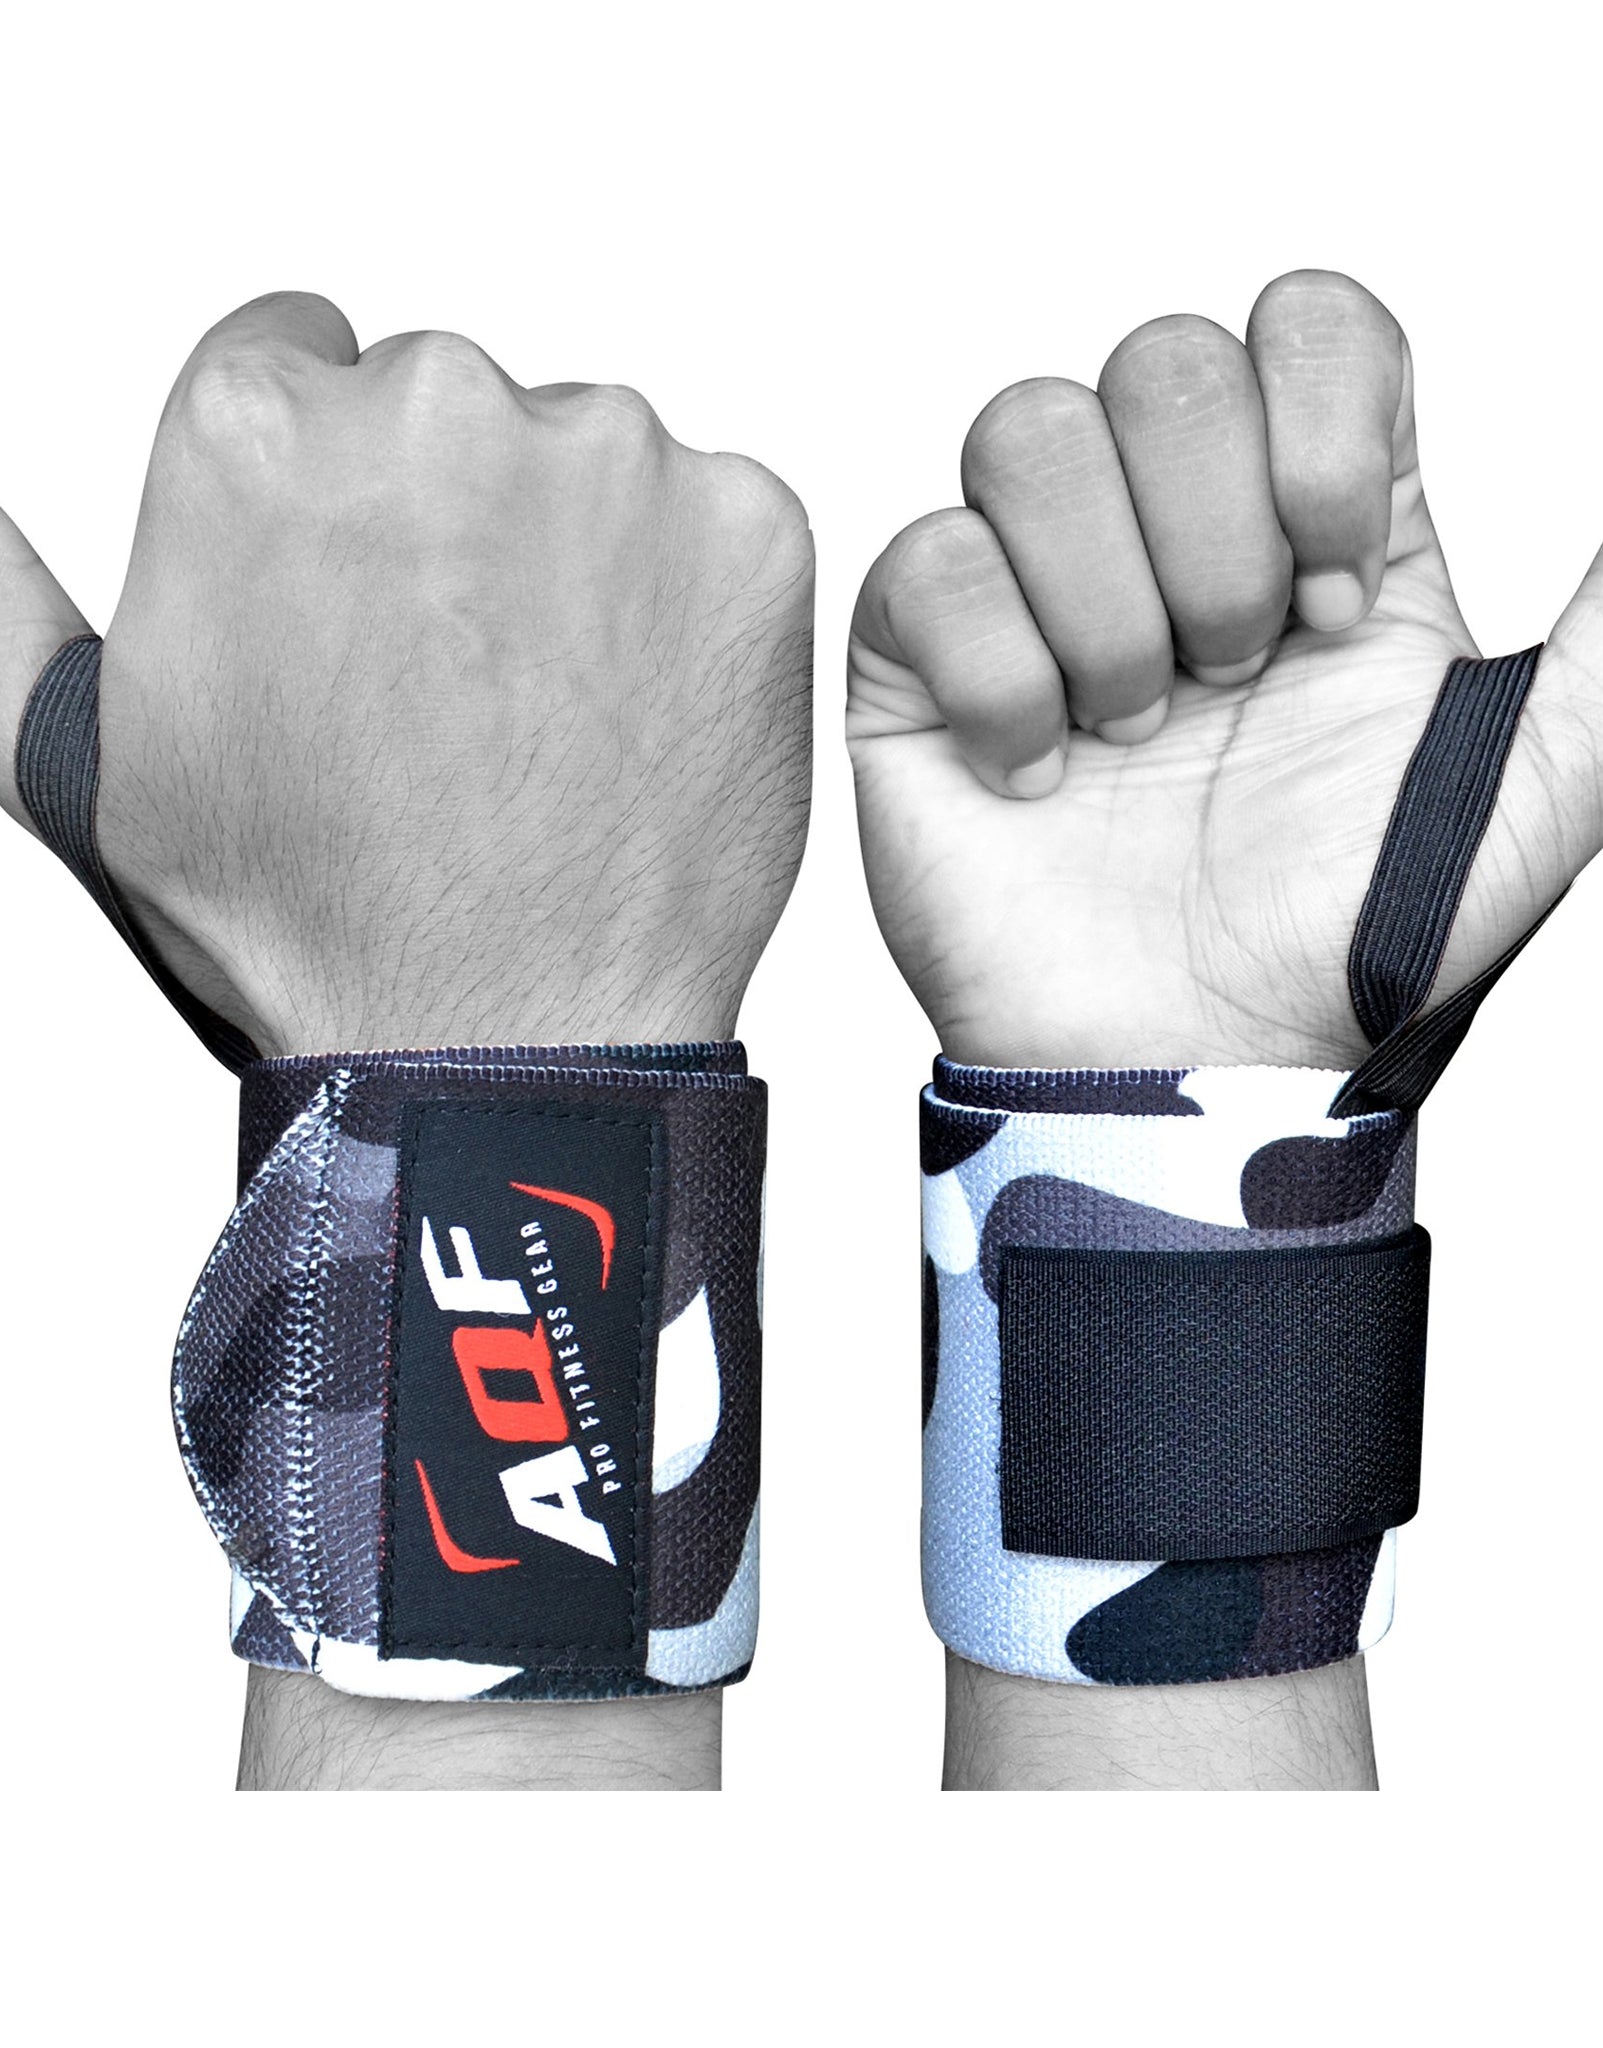 Grey Camo  Weight Lifting Wrist Wraps Bandage - AQF Sports